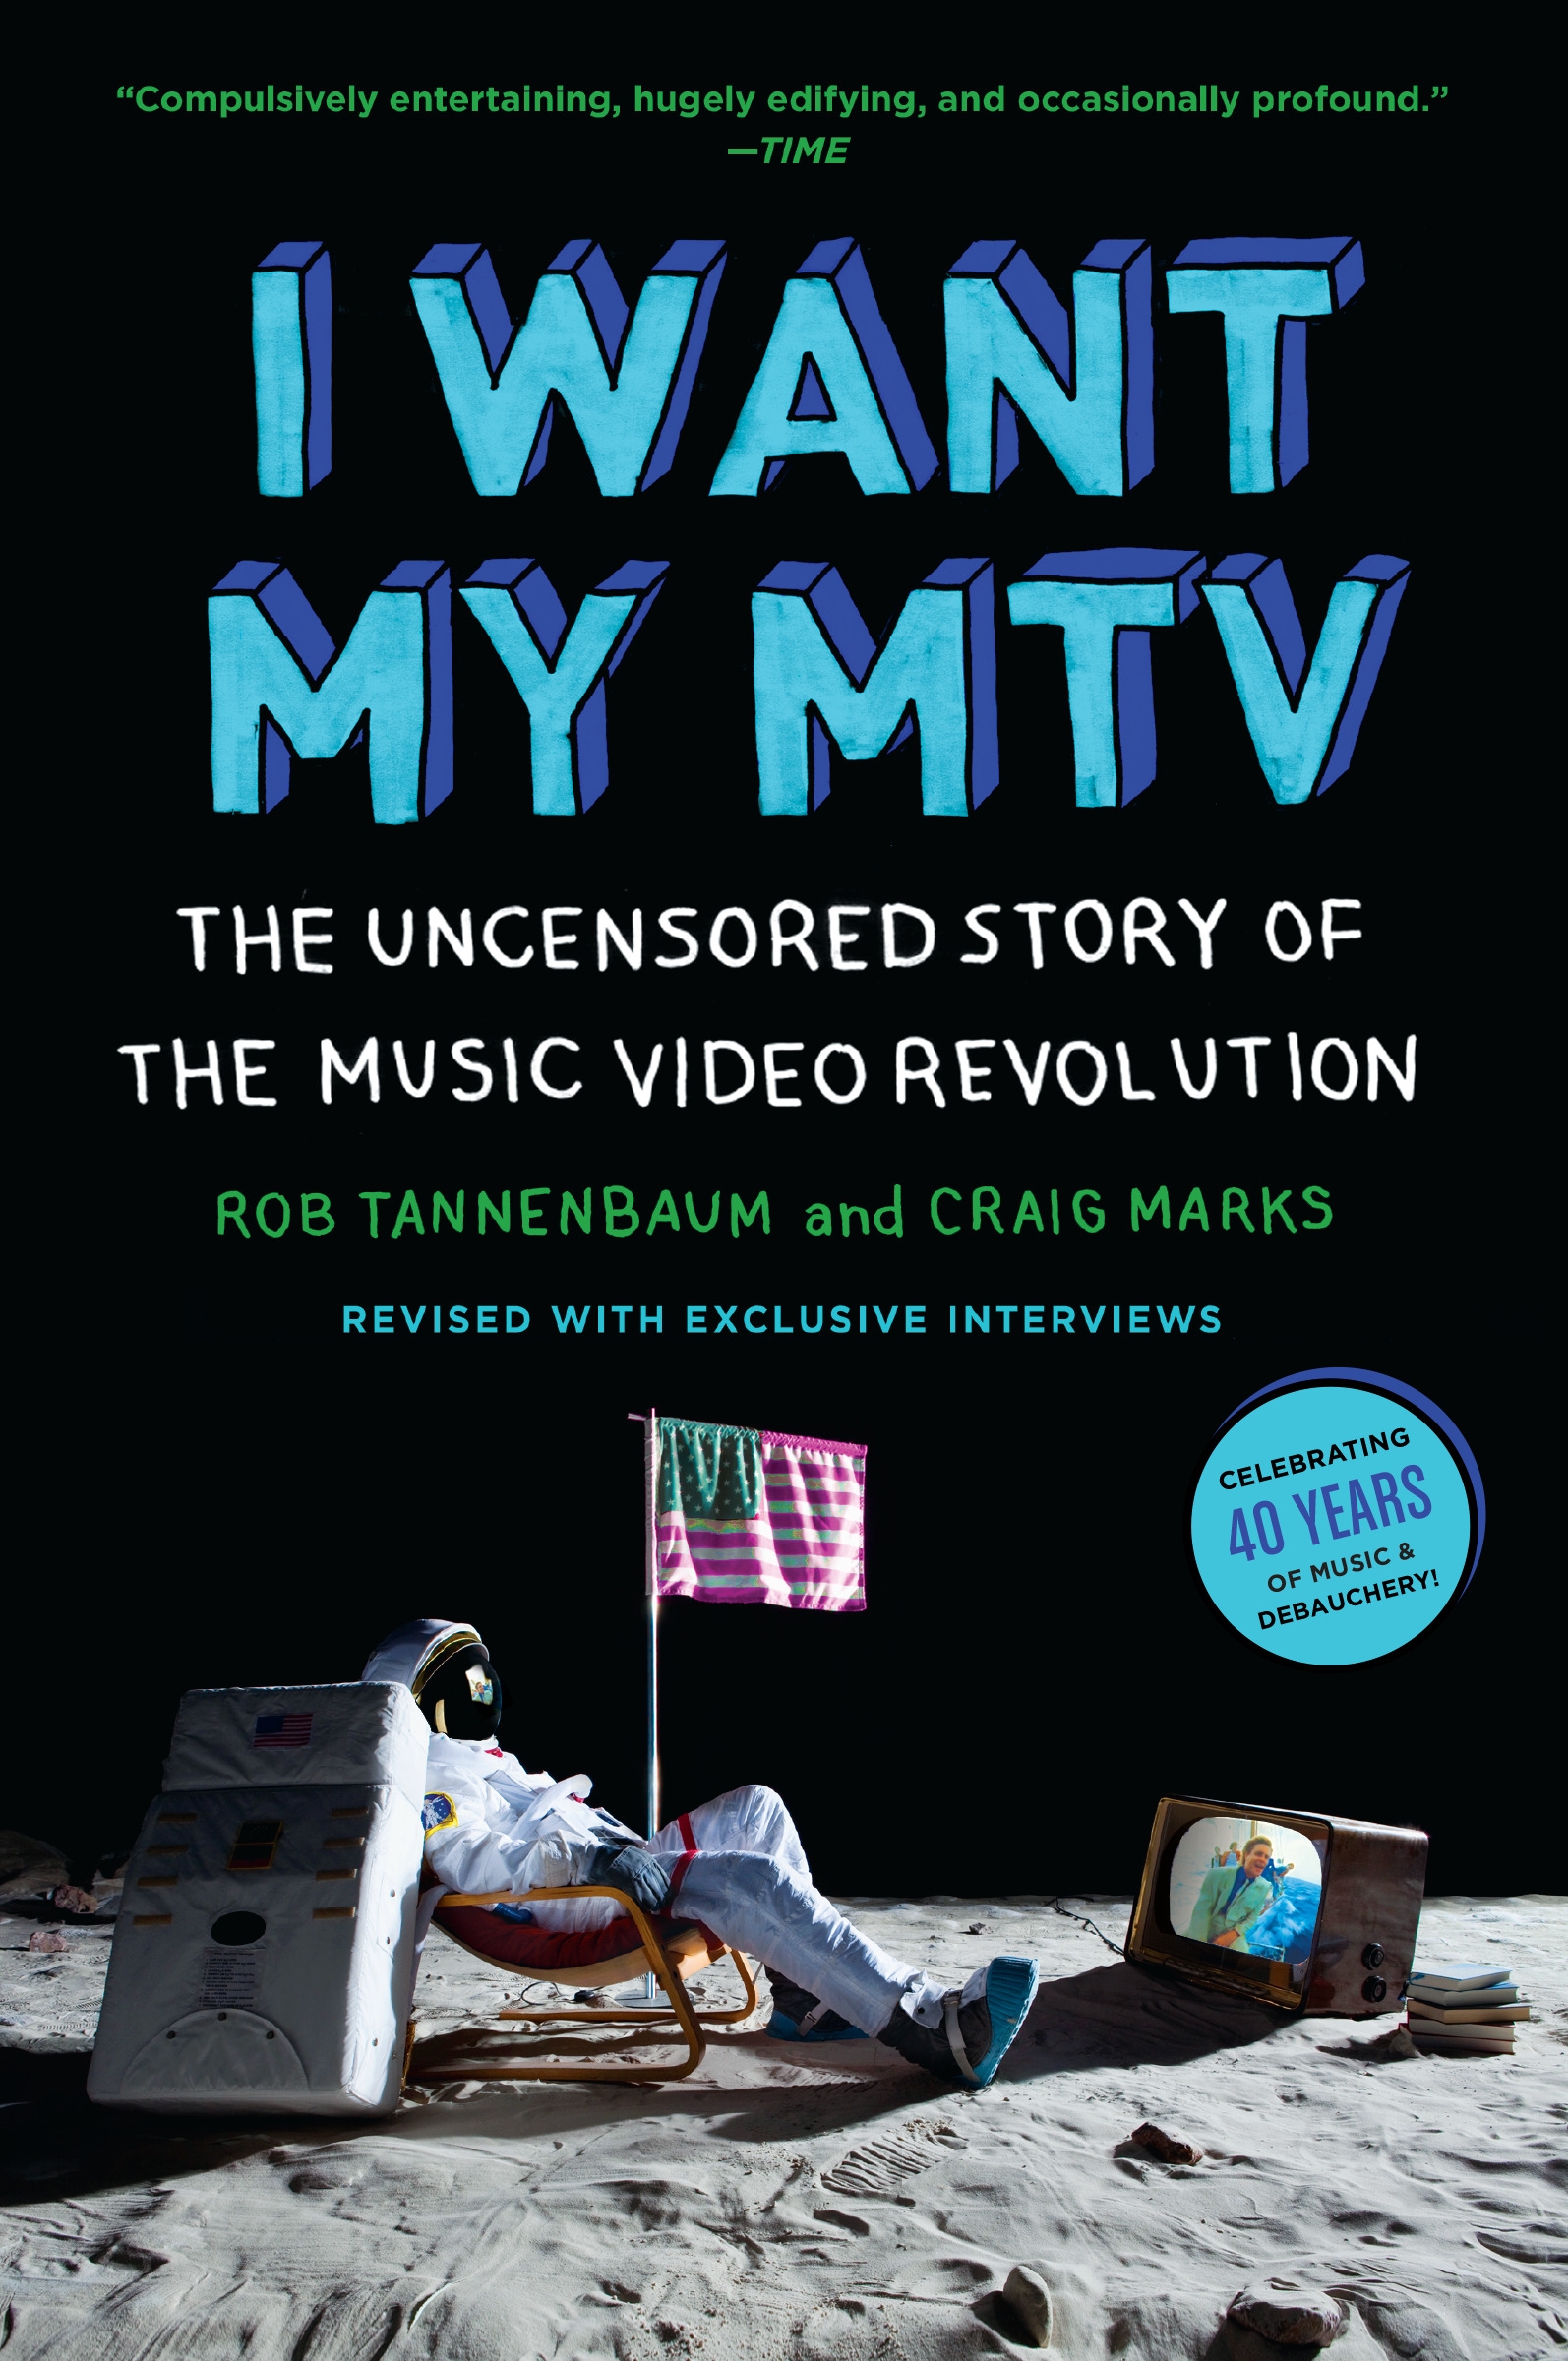 I Want My MTV by Craig Marks